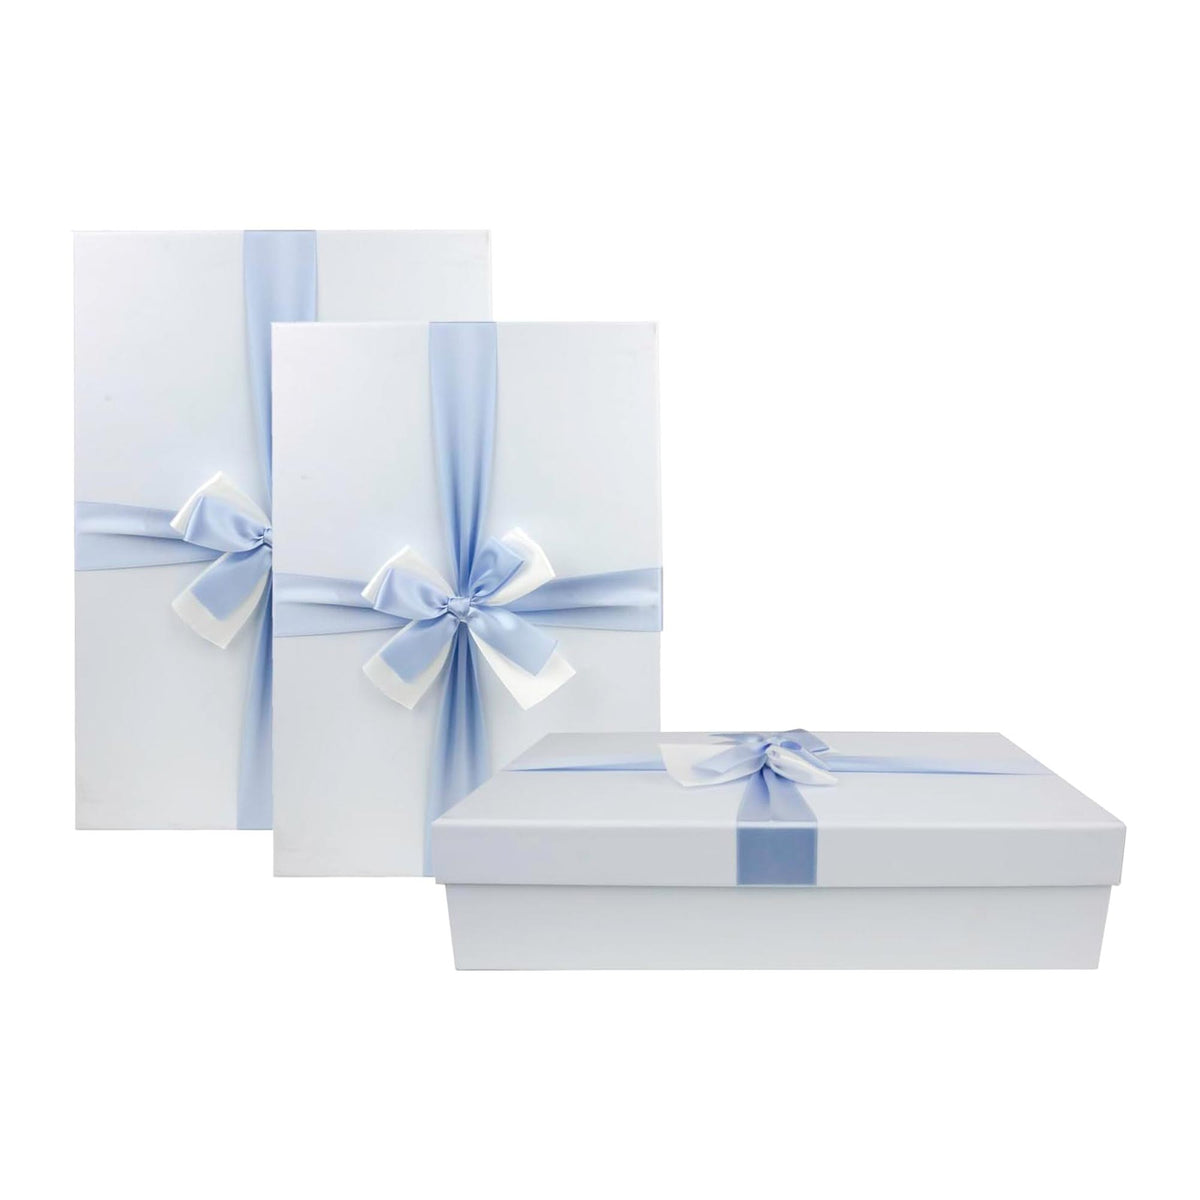 Luxury Baby Blue Gift Boxes - Set of 3